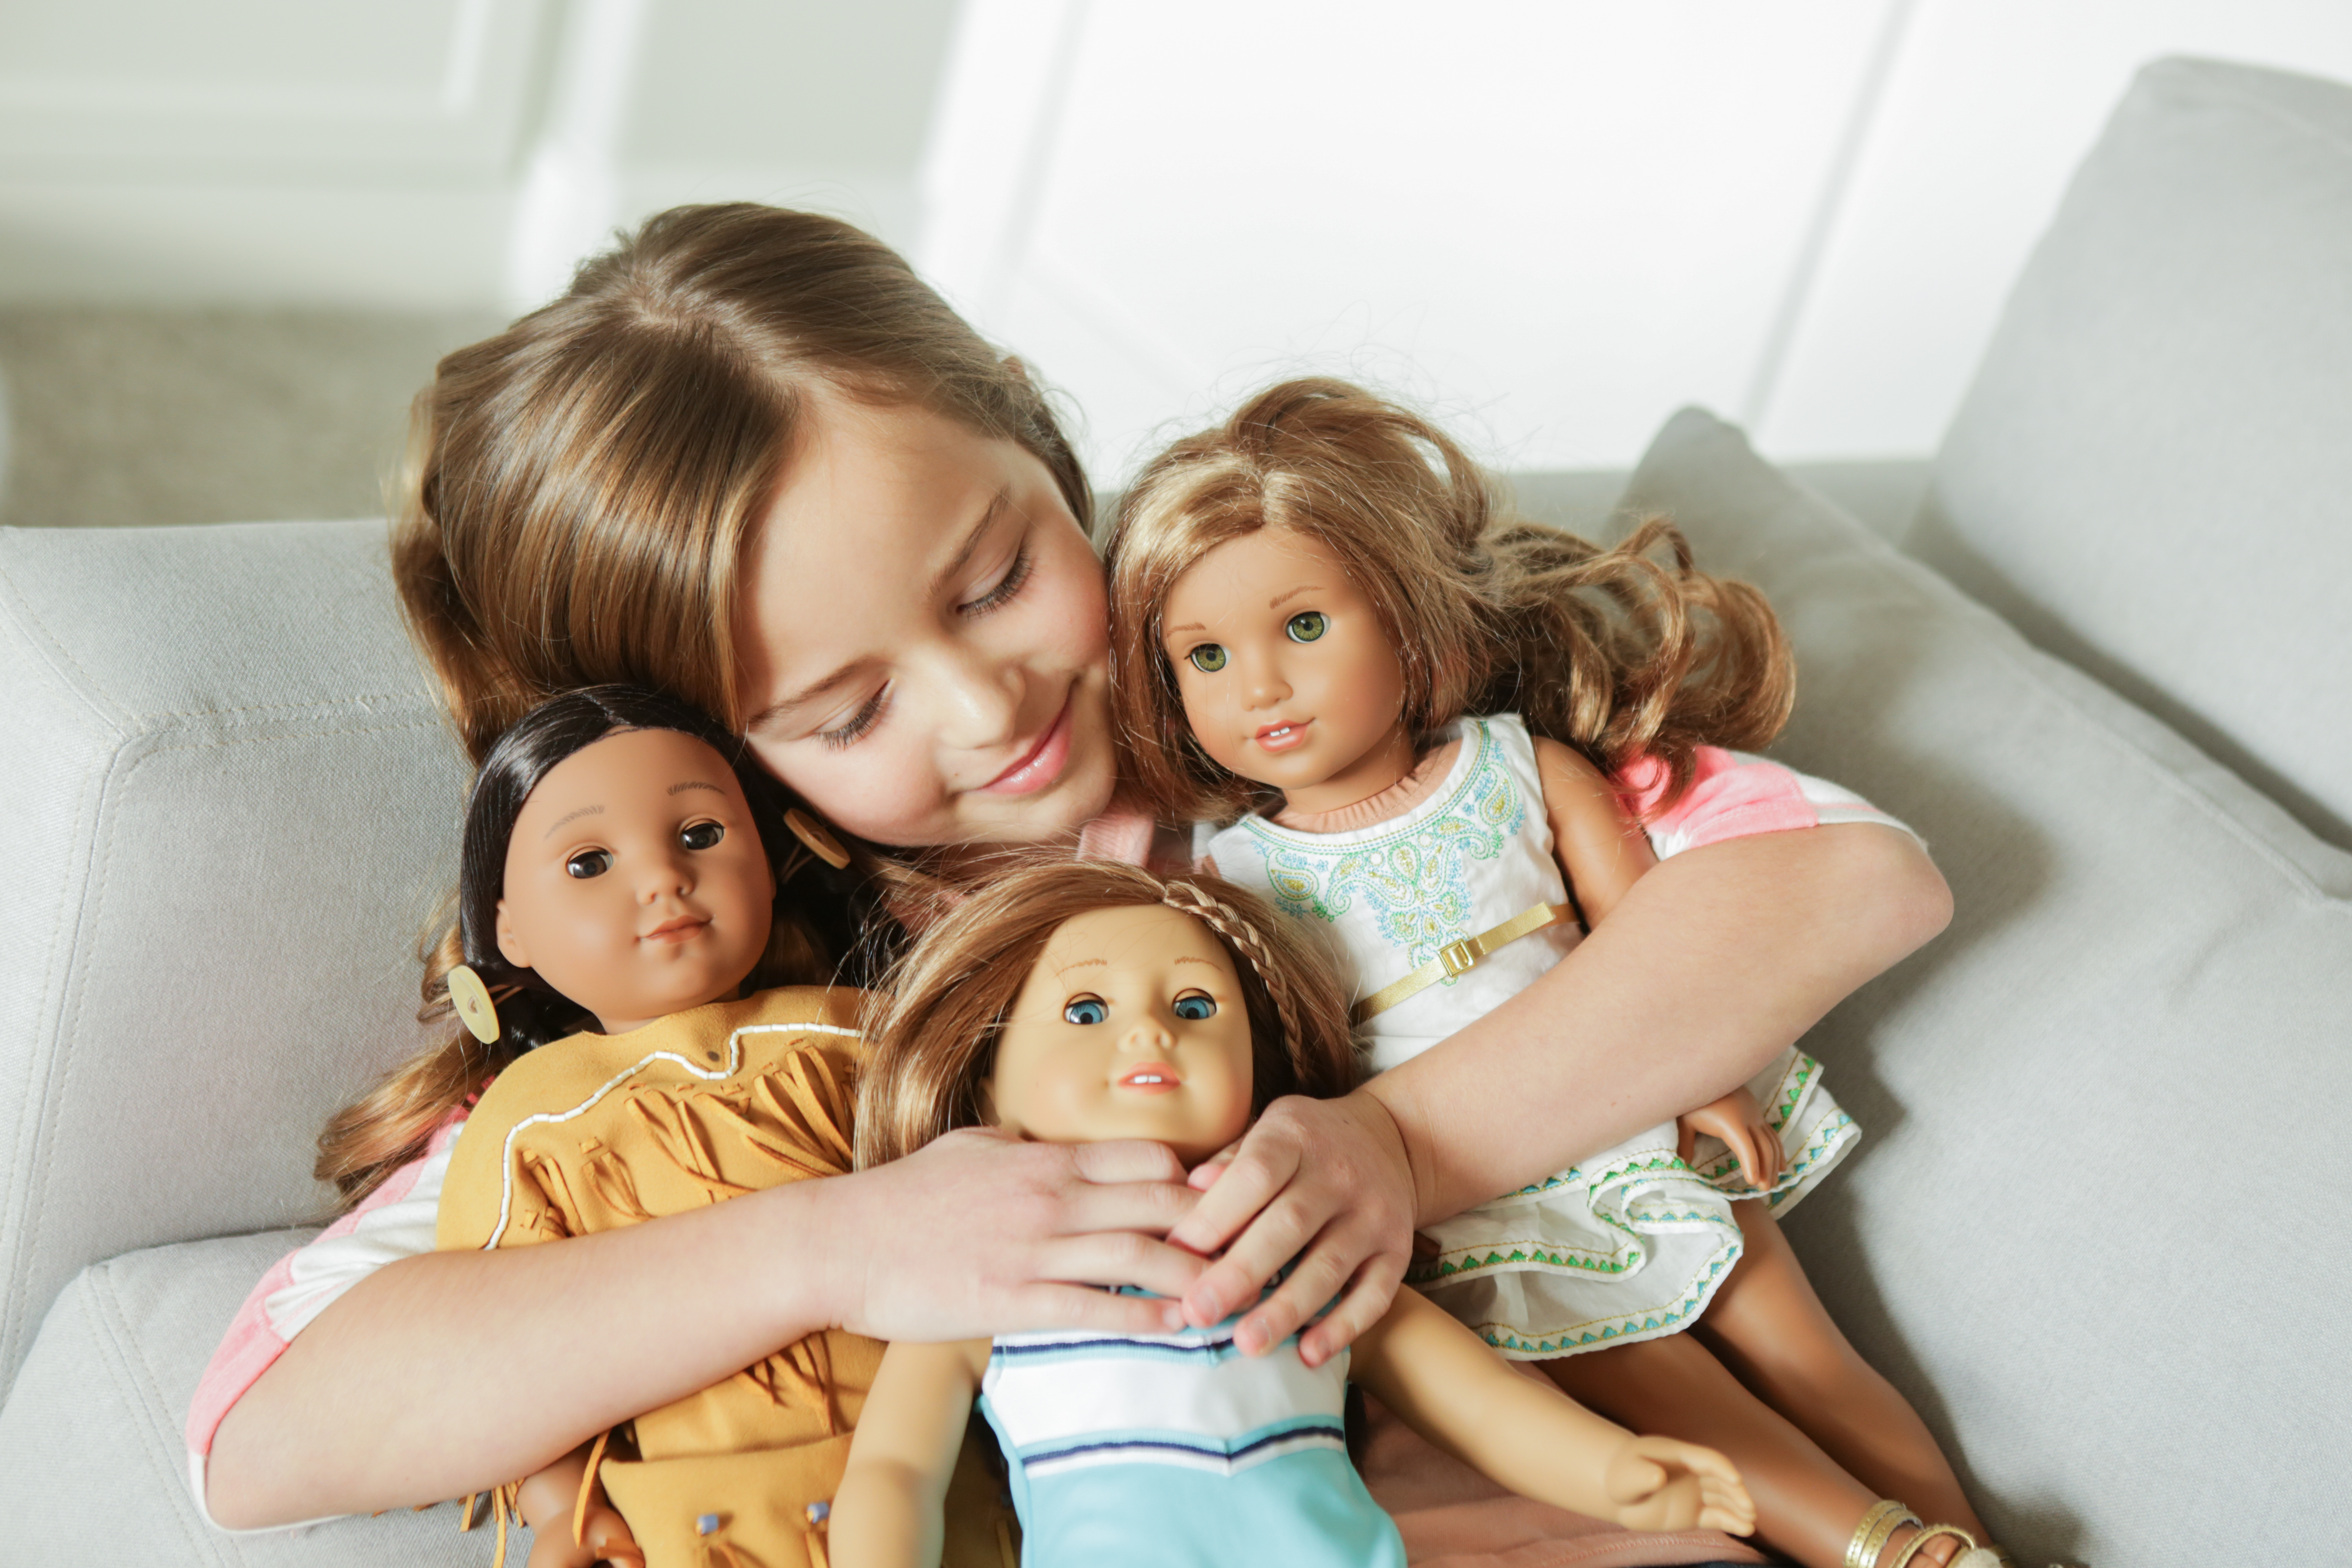 american girl doll sales 2018